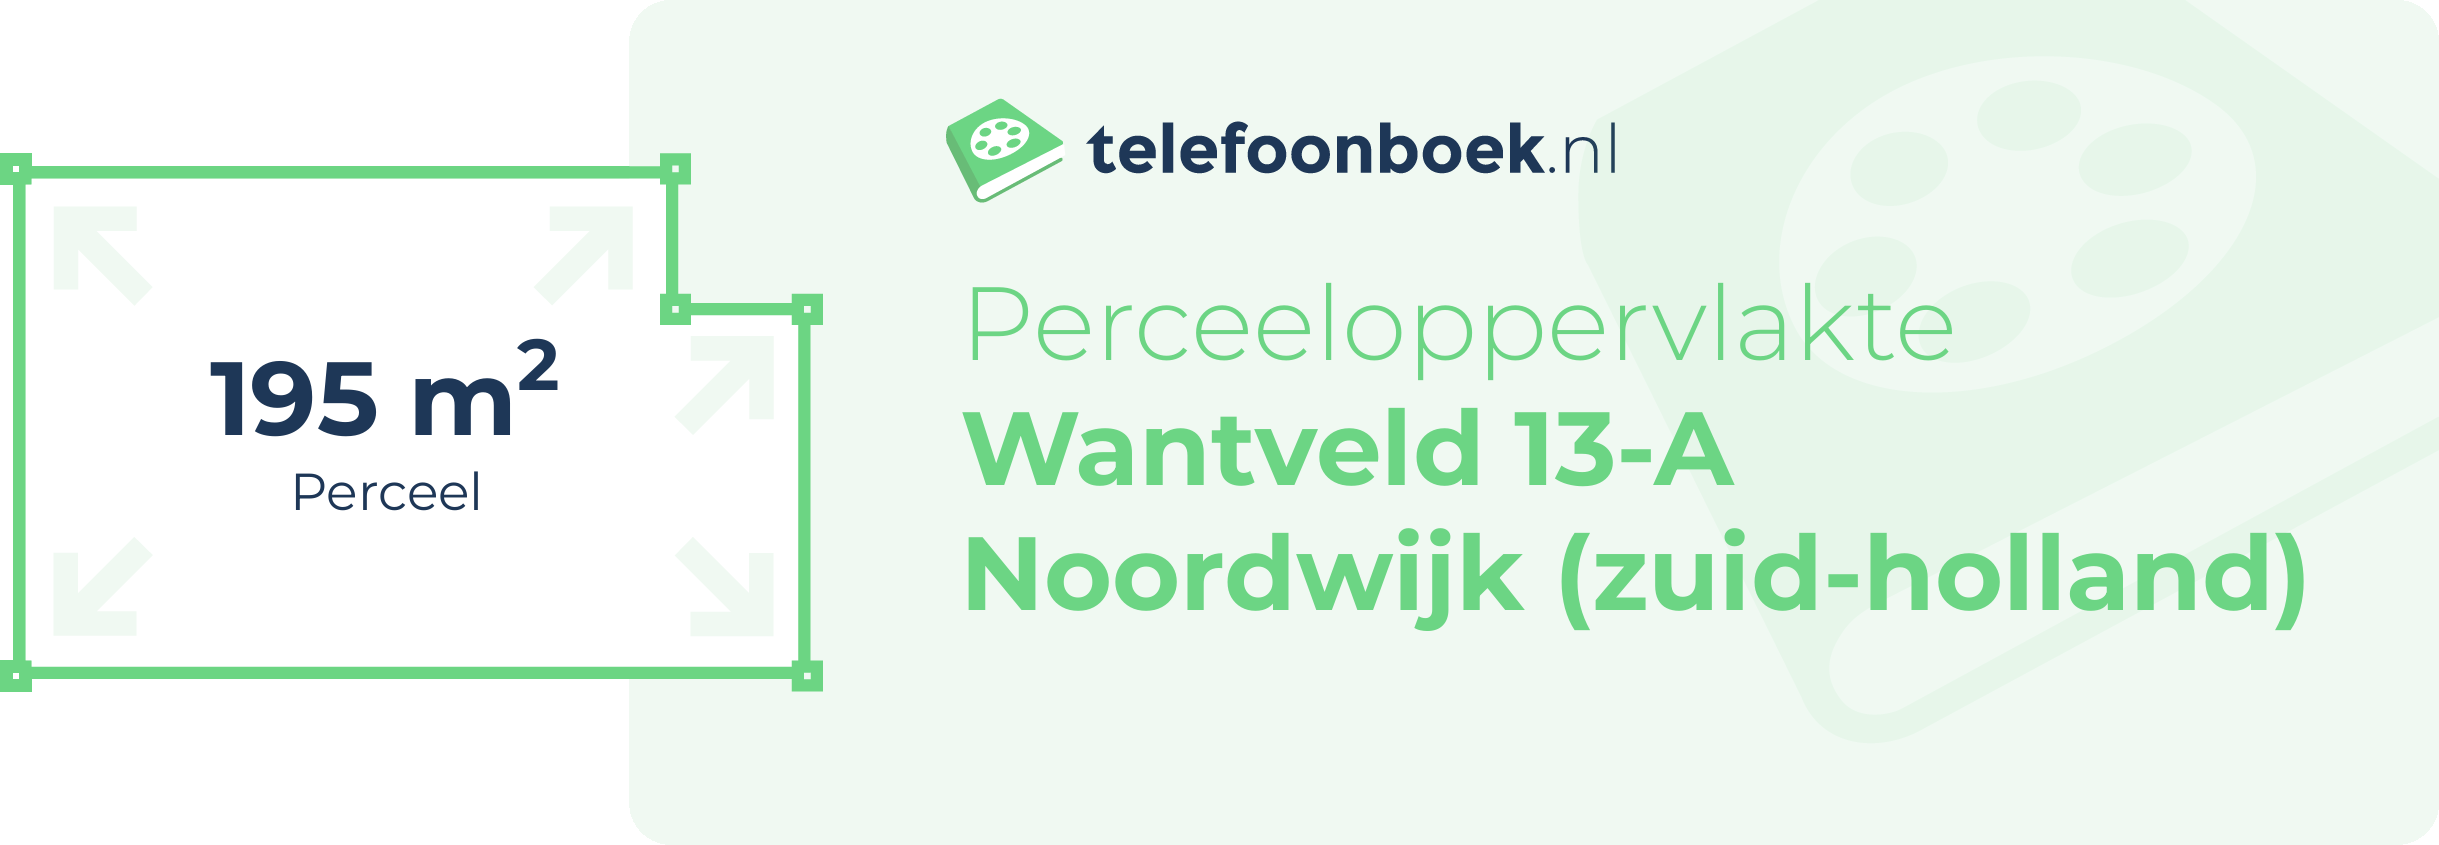 Perceeloppervlakte Wantveld 13-A Noordwijk (Zuid-Holland)